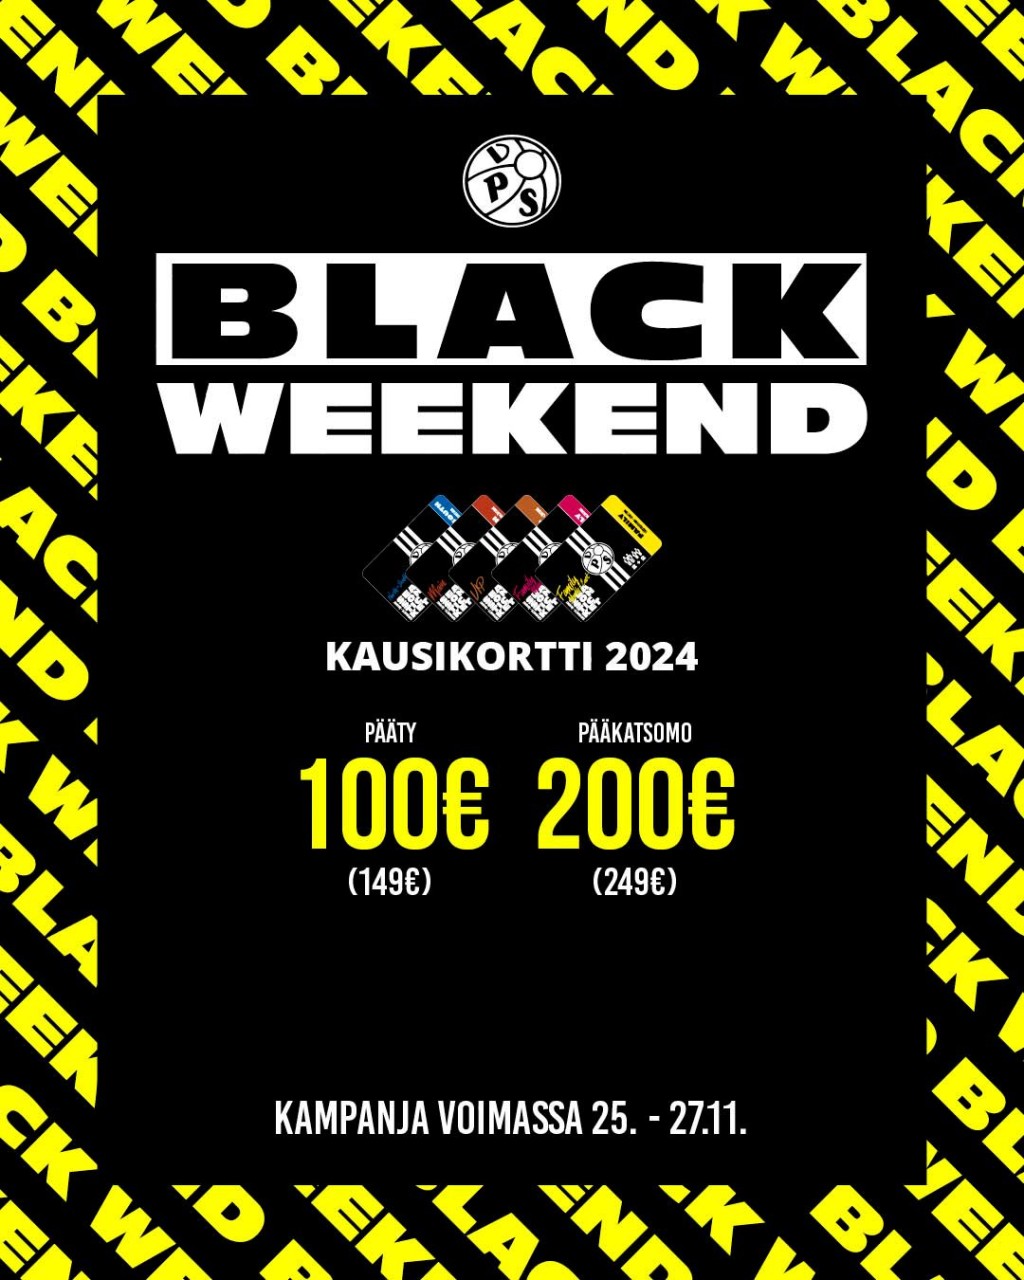 VPS toteuttaa Black Weekend -kampanjan!